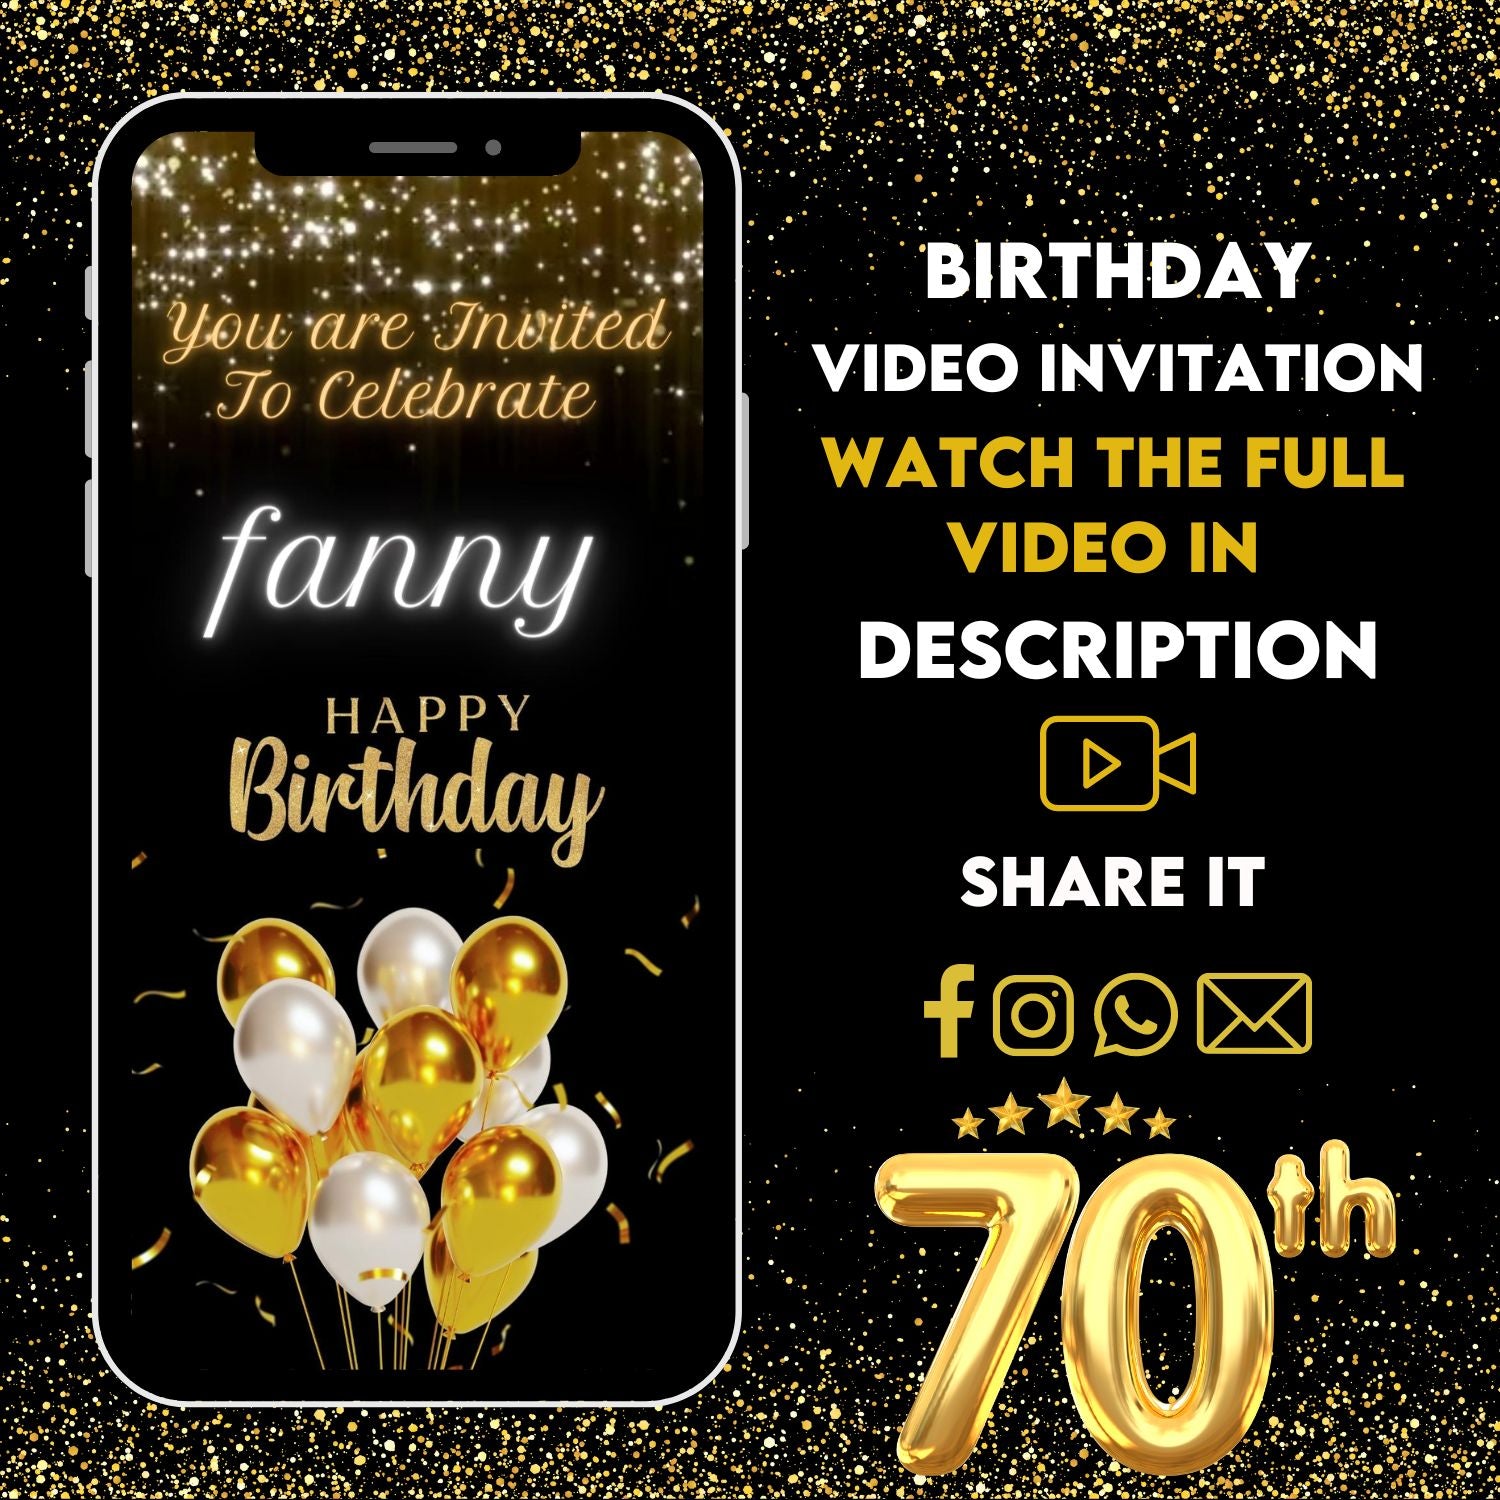 70th Digital Birthday Video Invitation